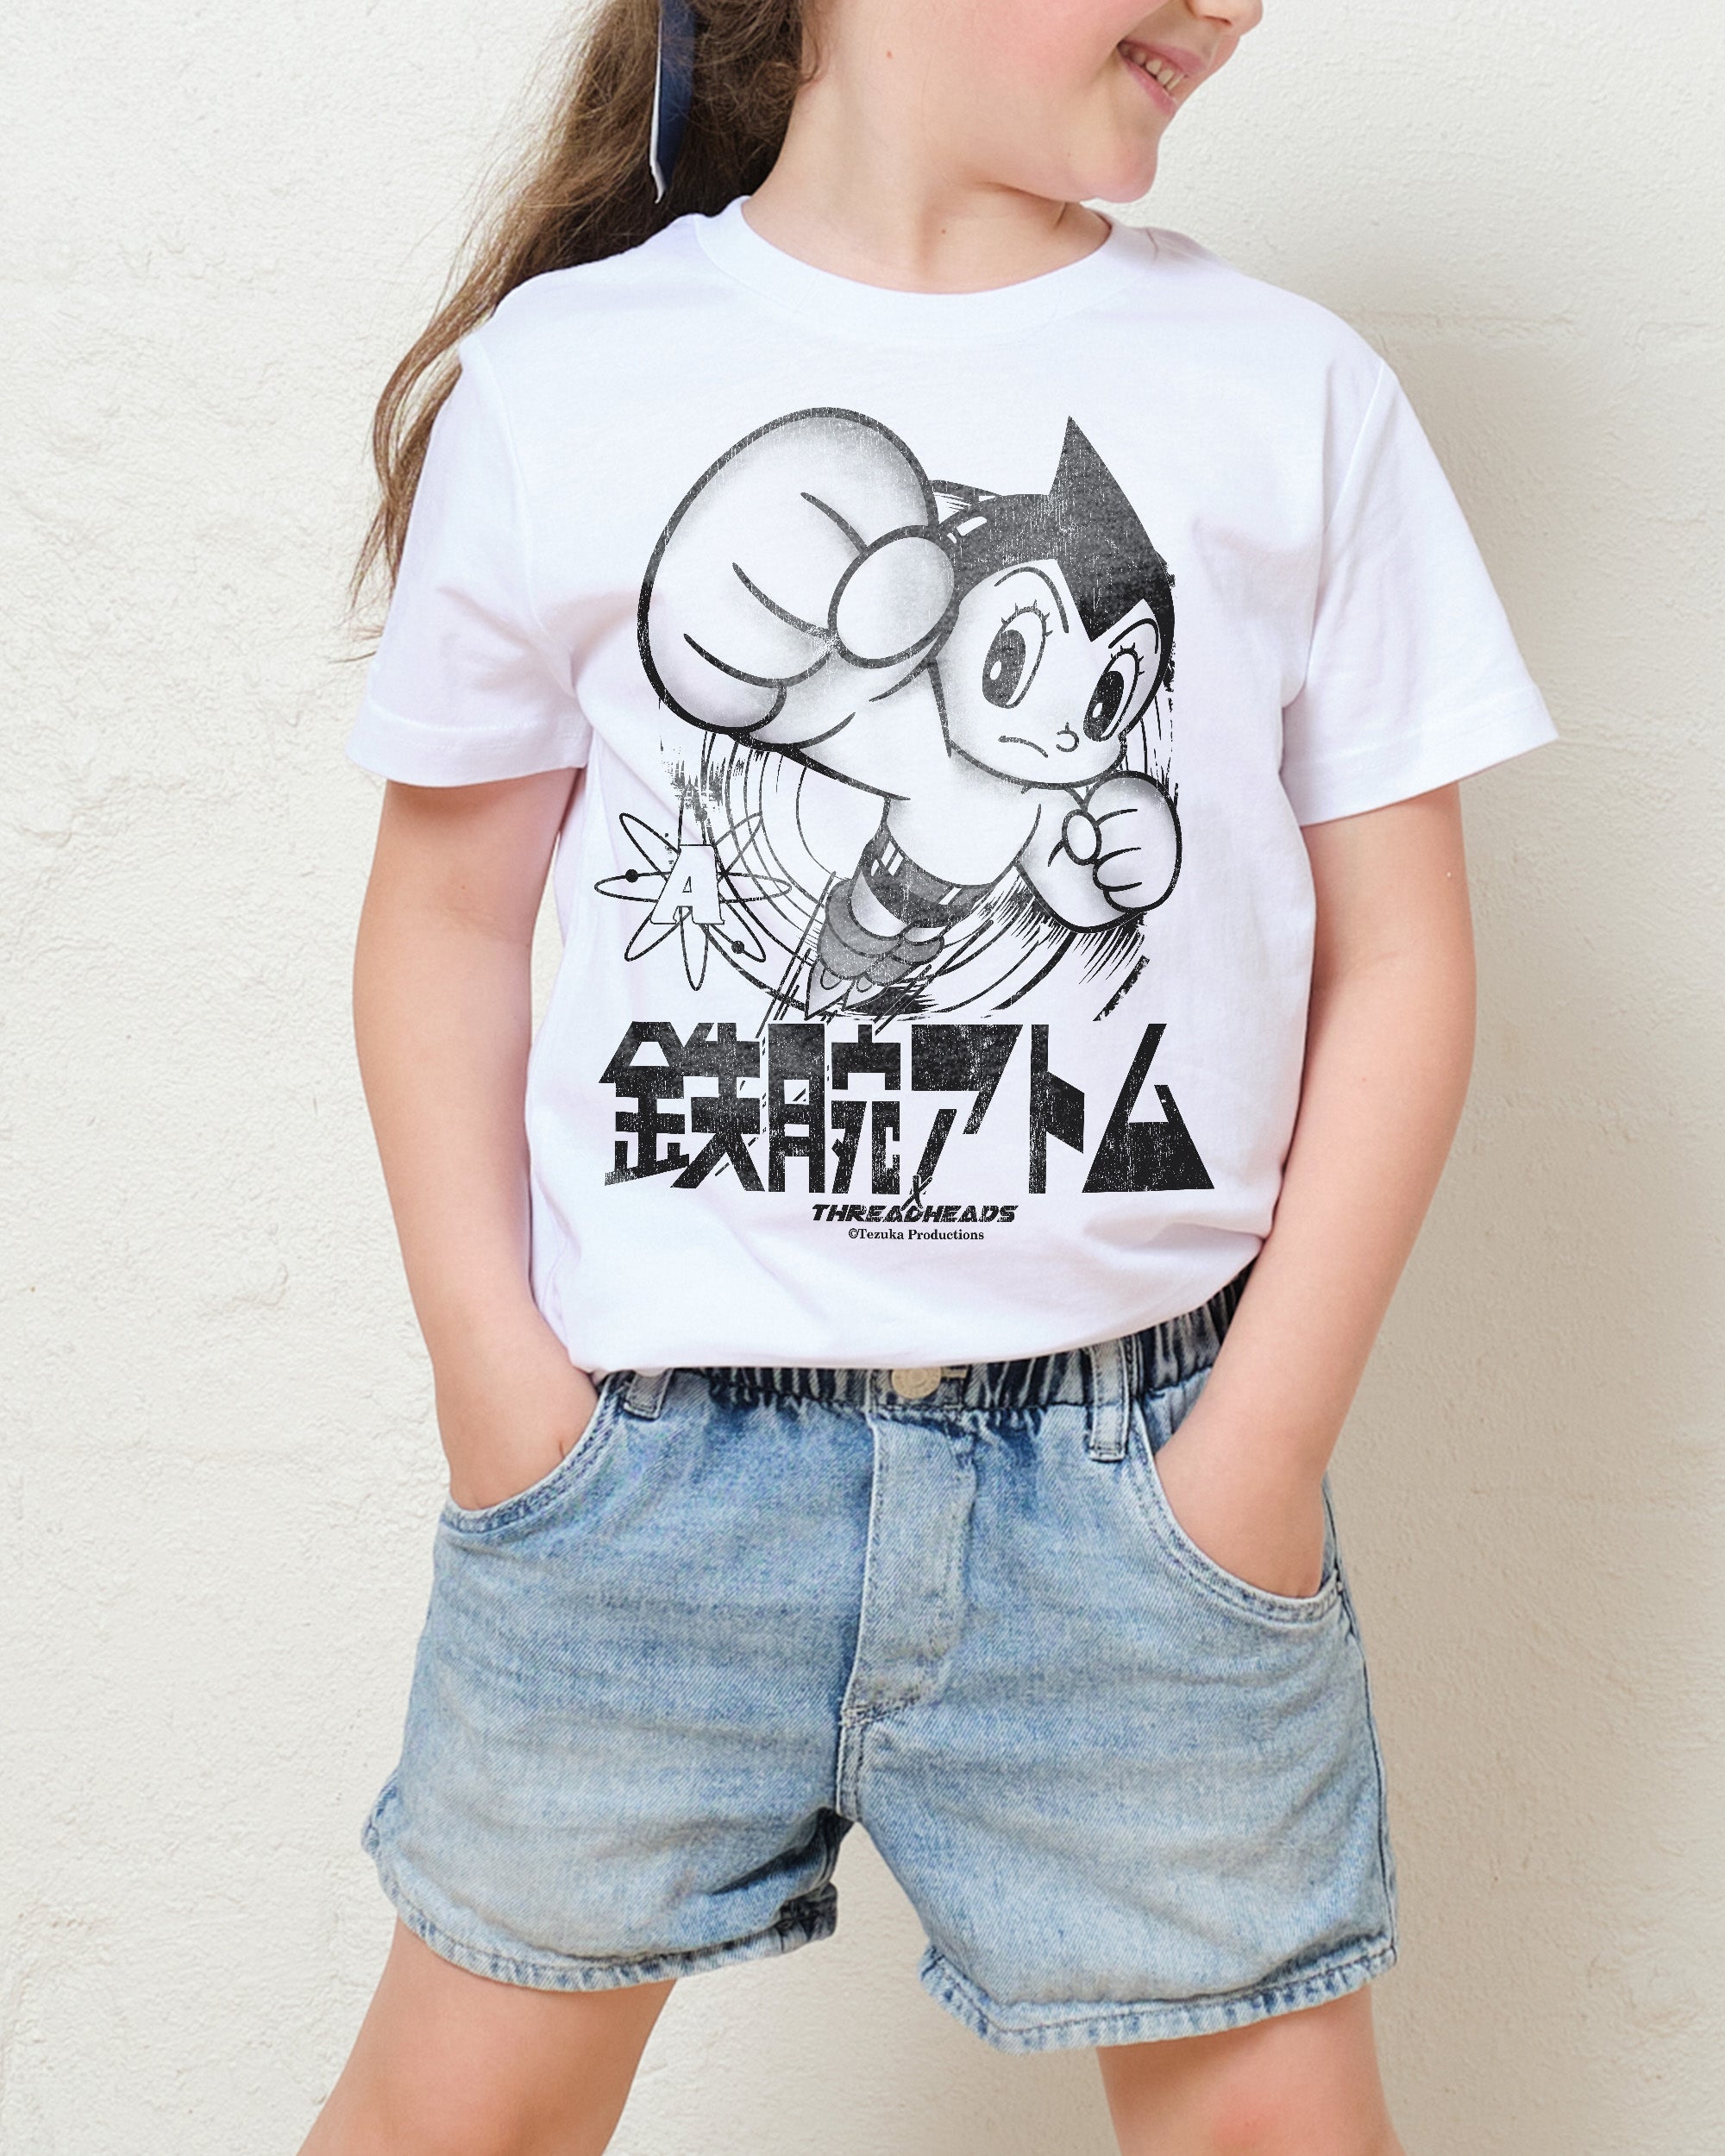 Astro Boy Black and White Kids T-Shirt